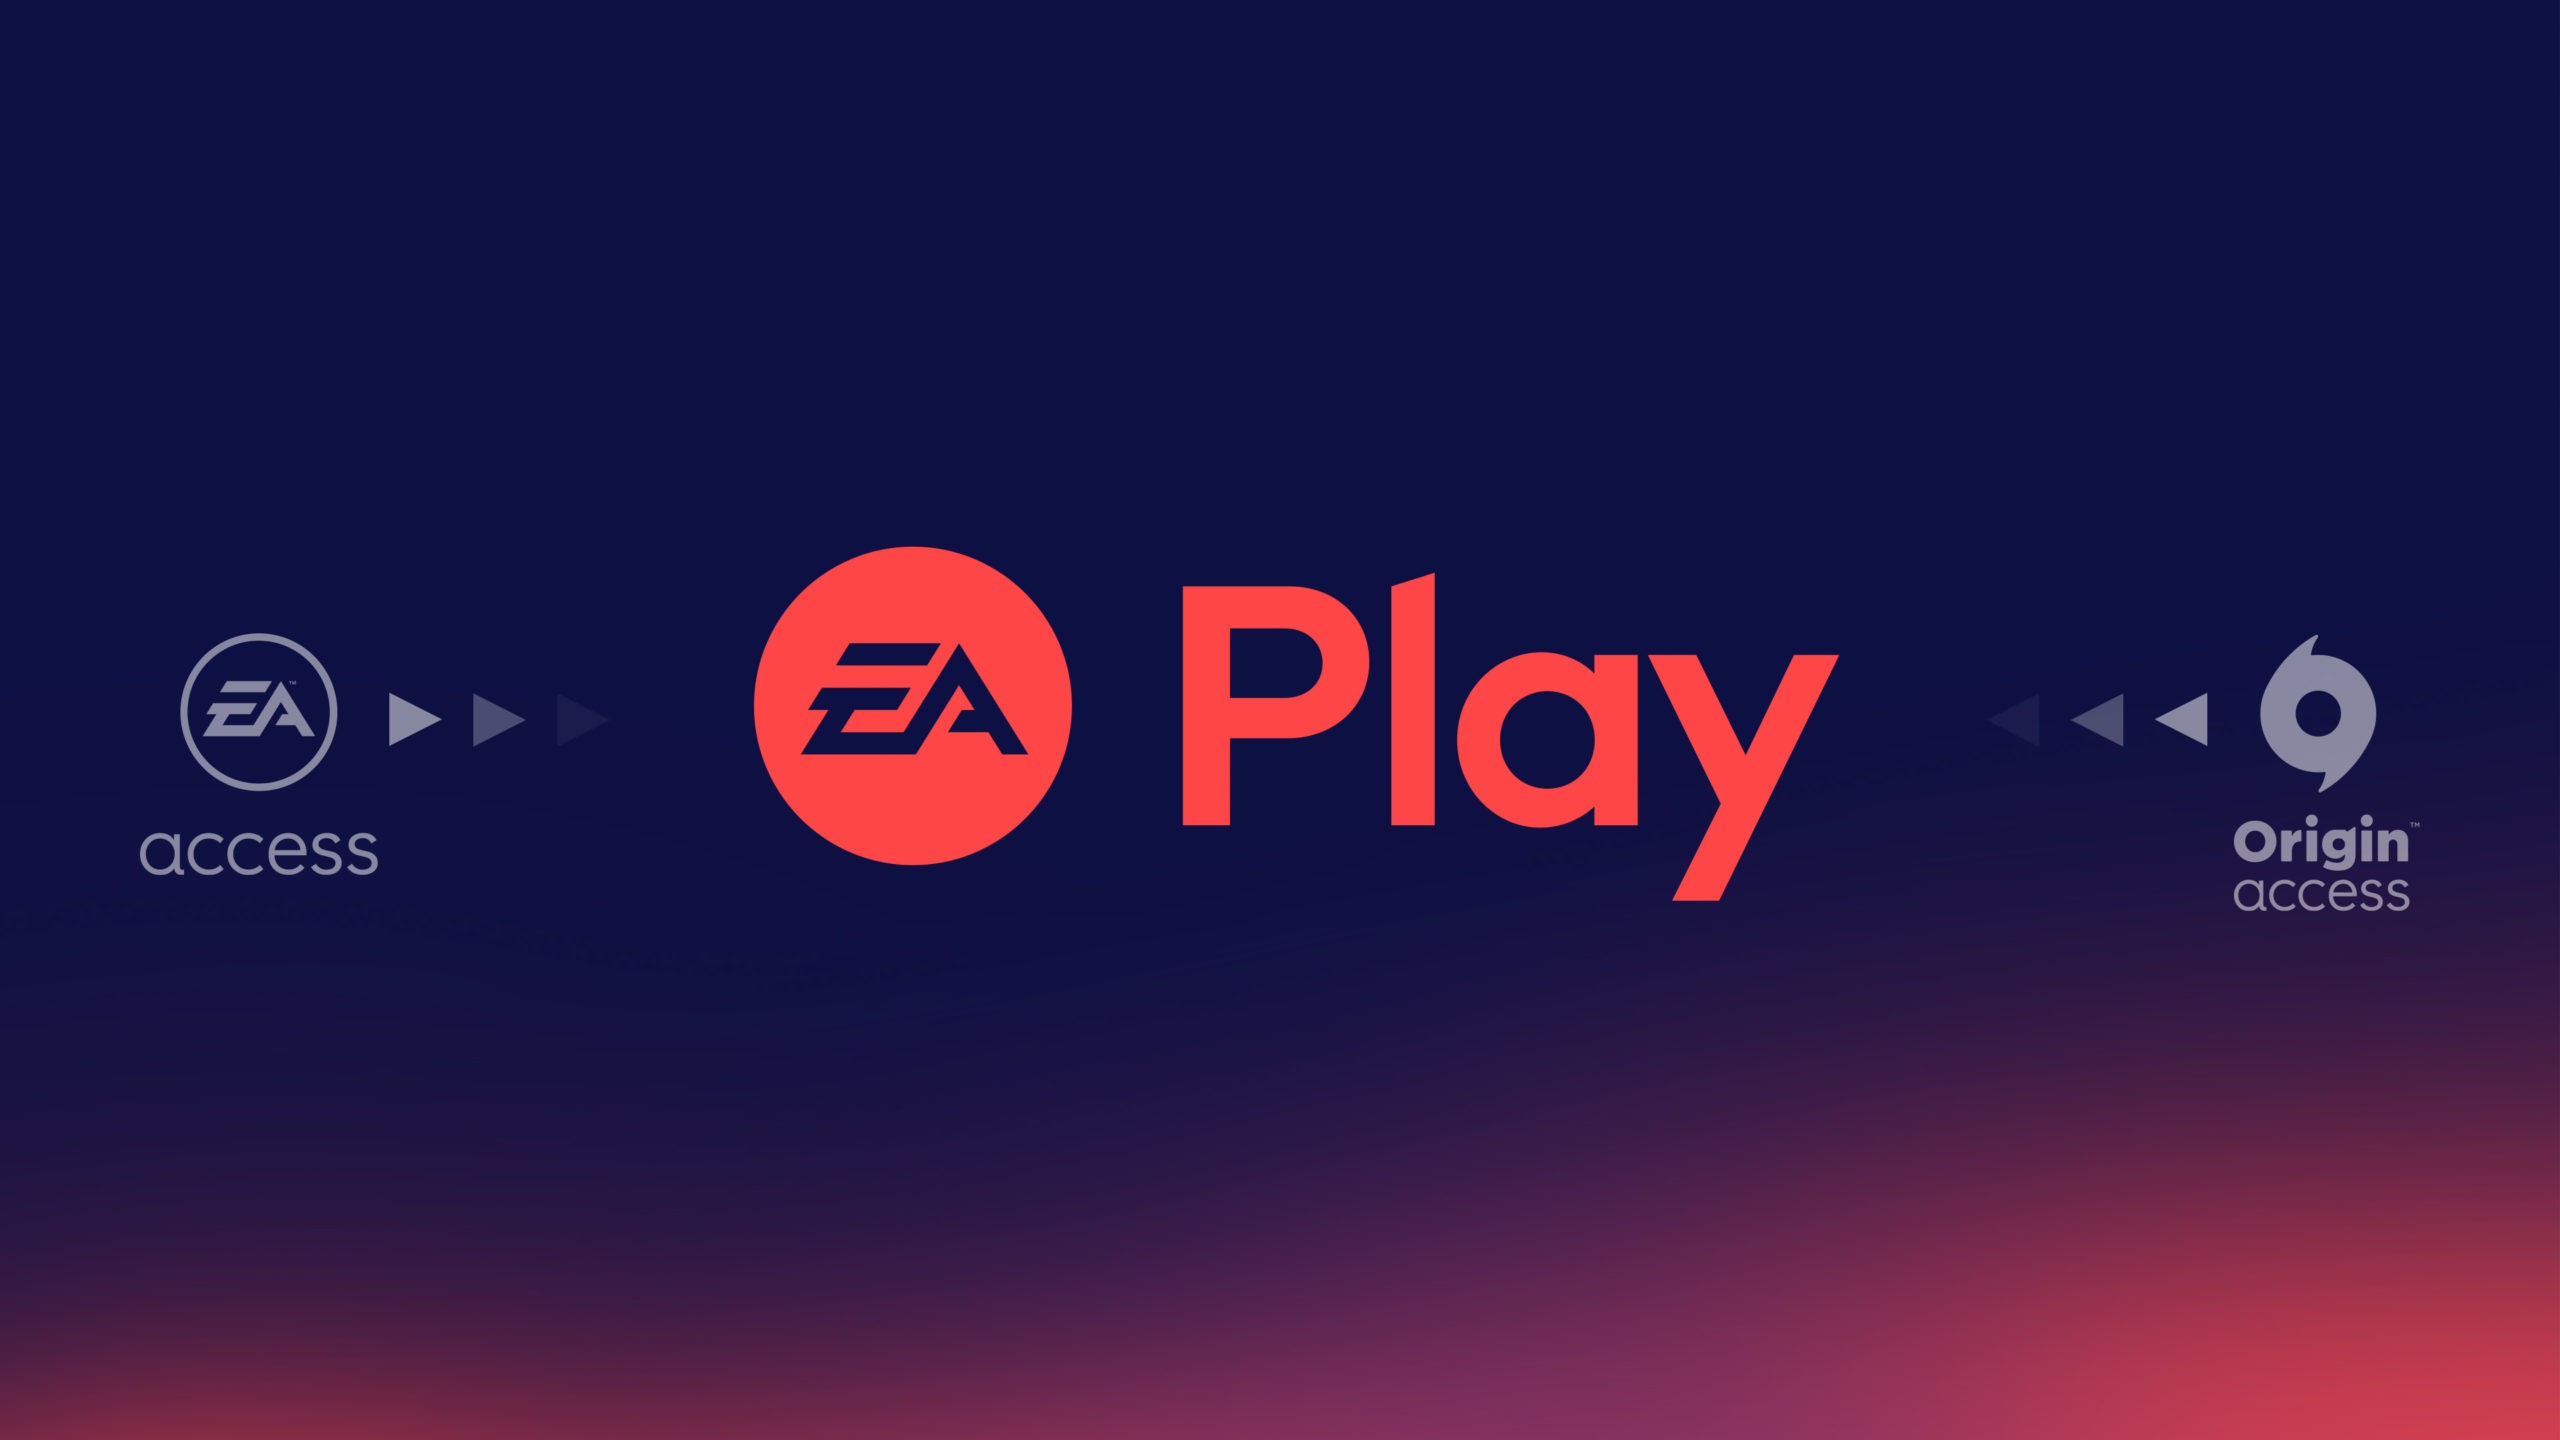 Origin Access and EA Access have a new name – EA Play